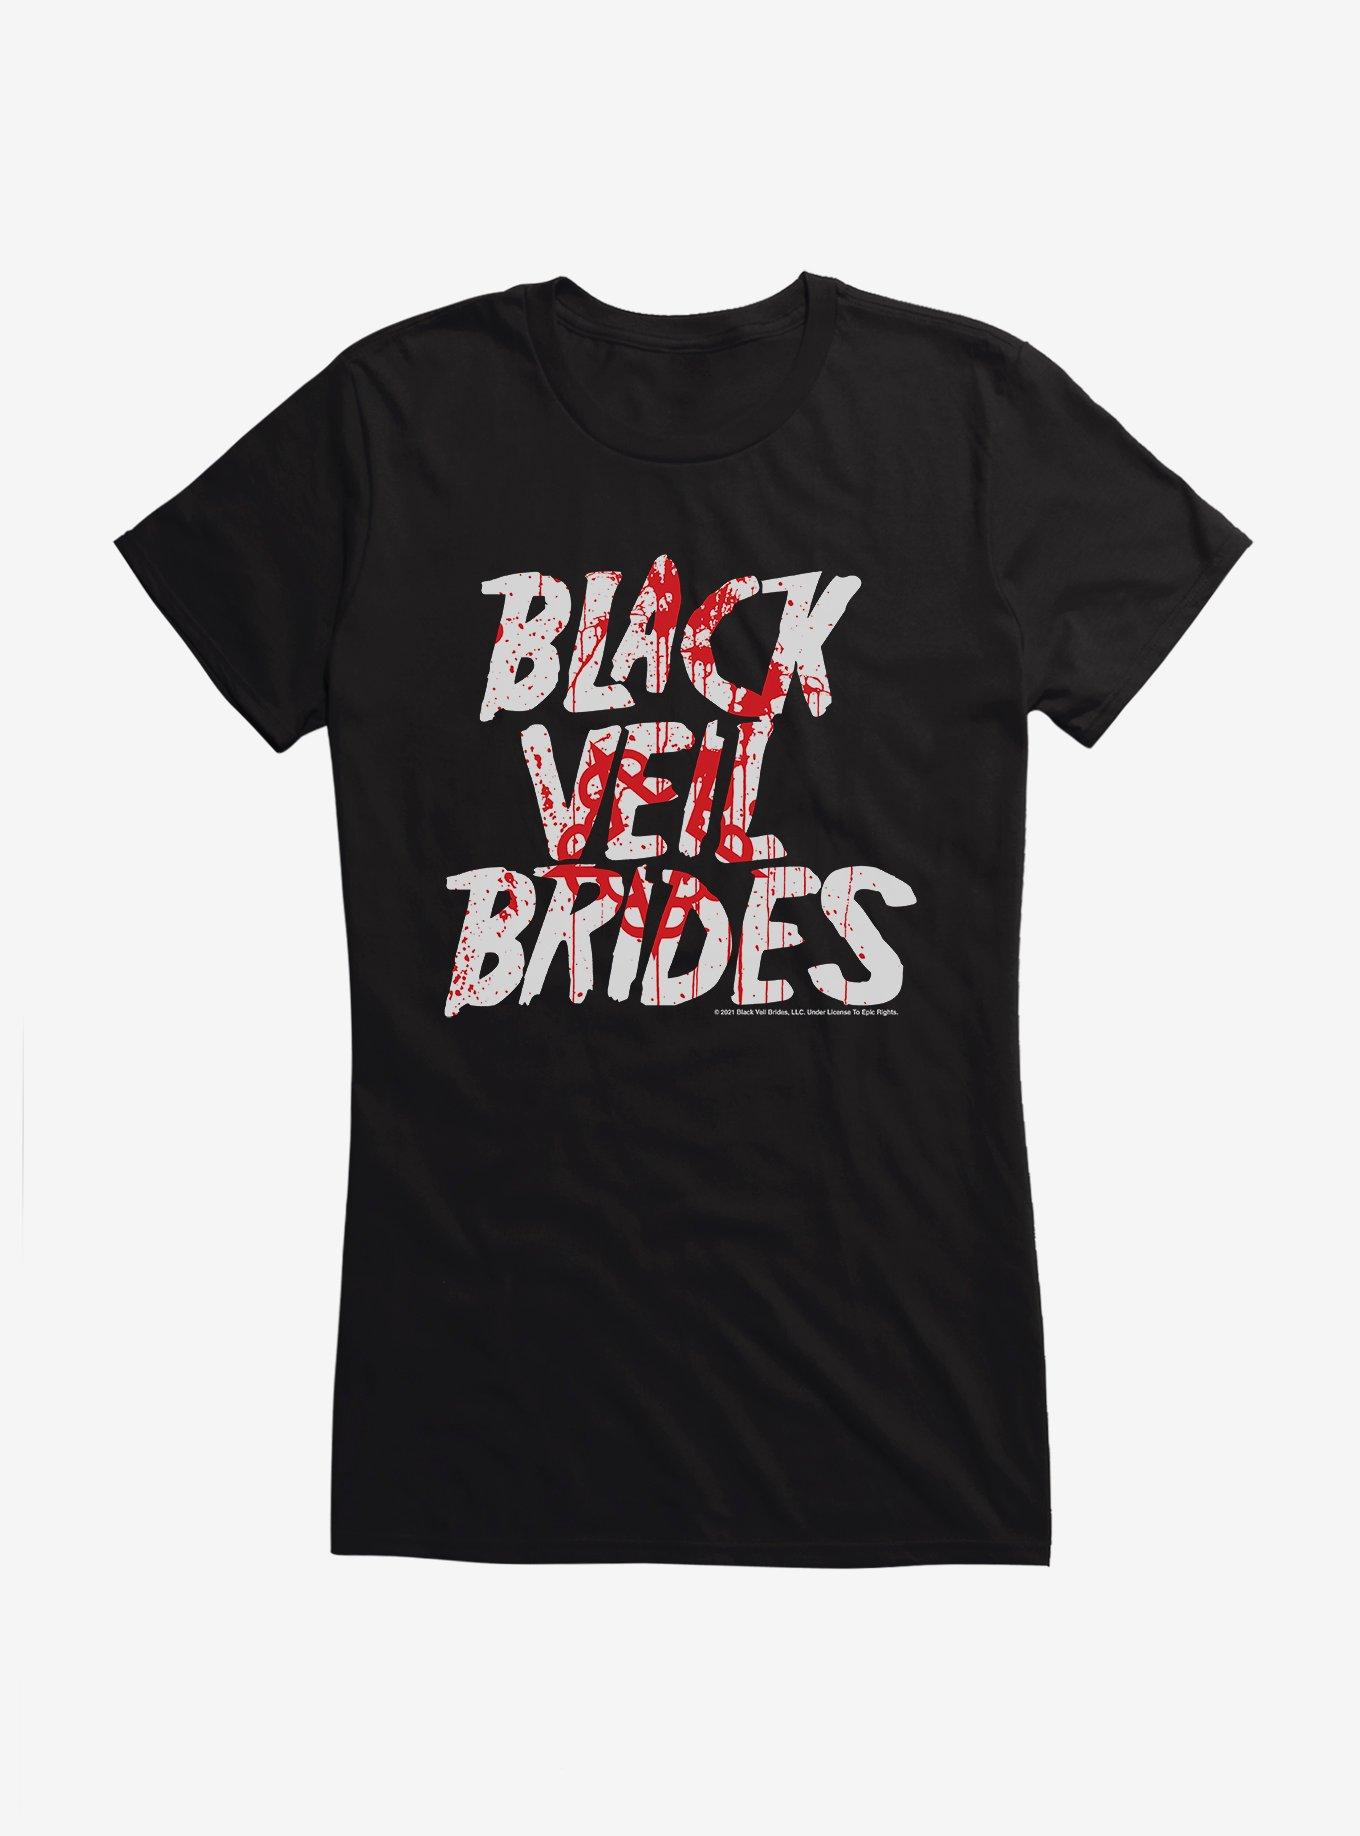 Black Veil Brides Band Logo Girls T-Shirt